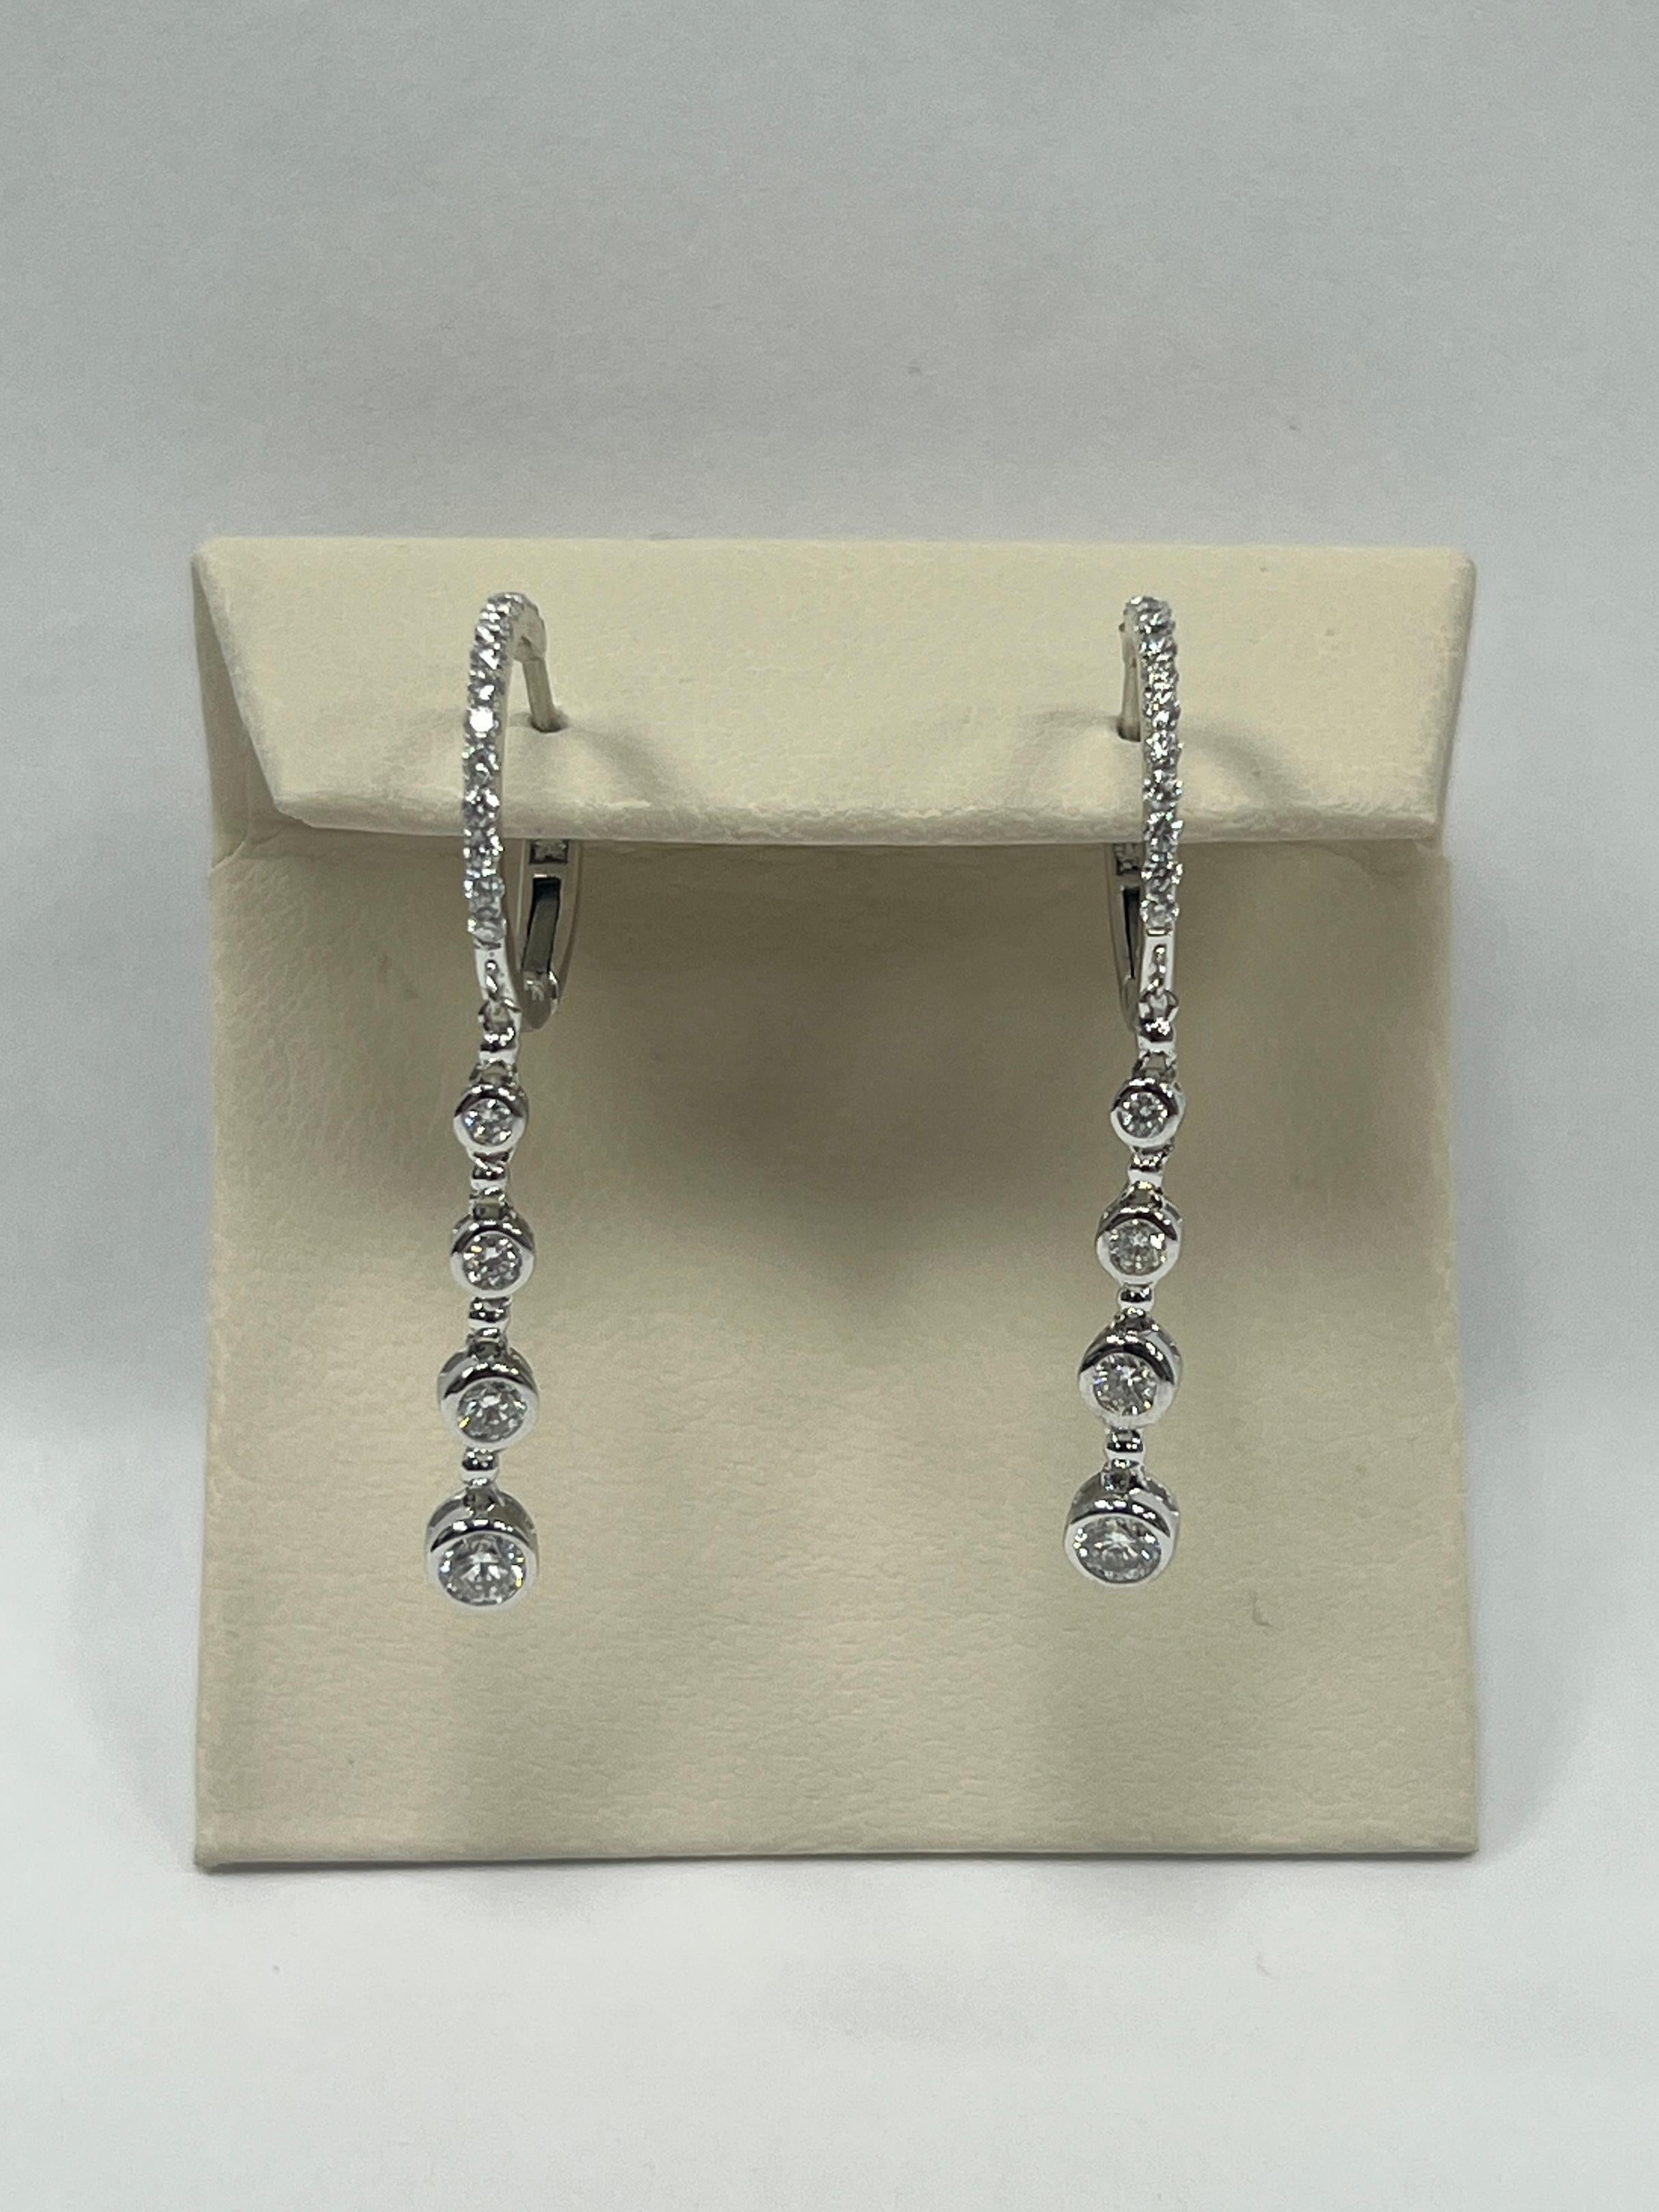 Brilliant Cut Diamond Earrings For Sale